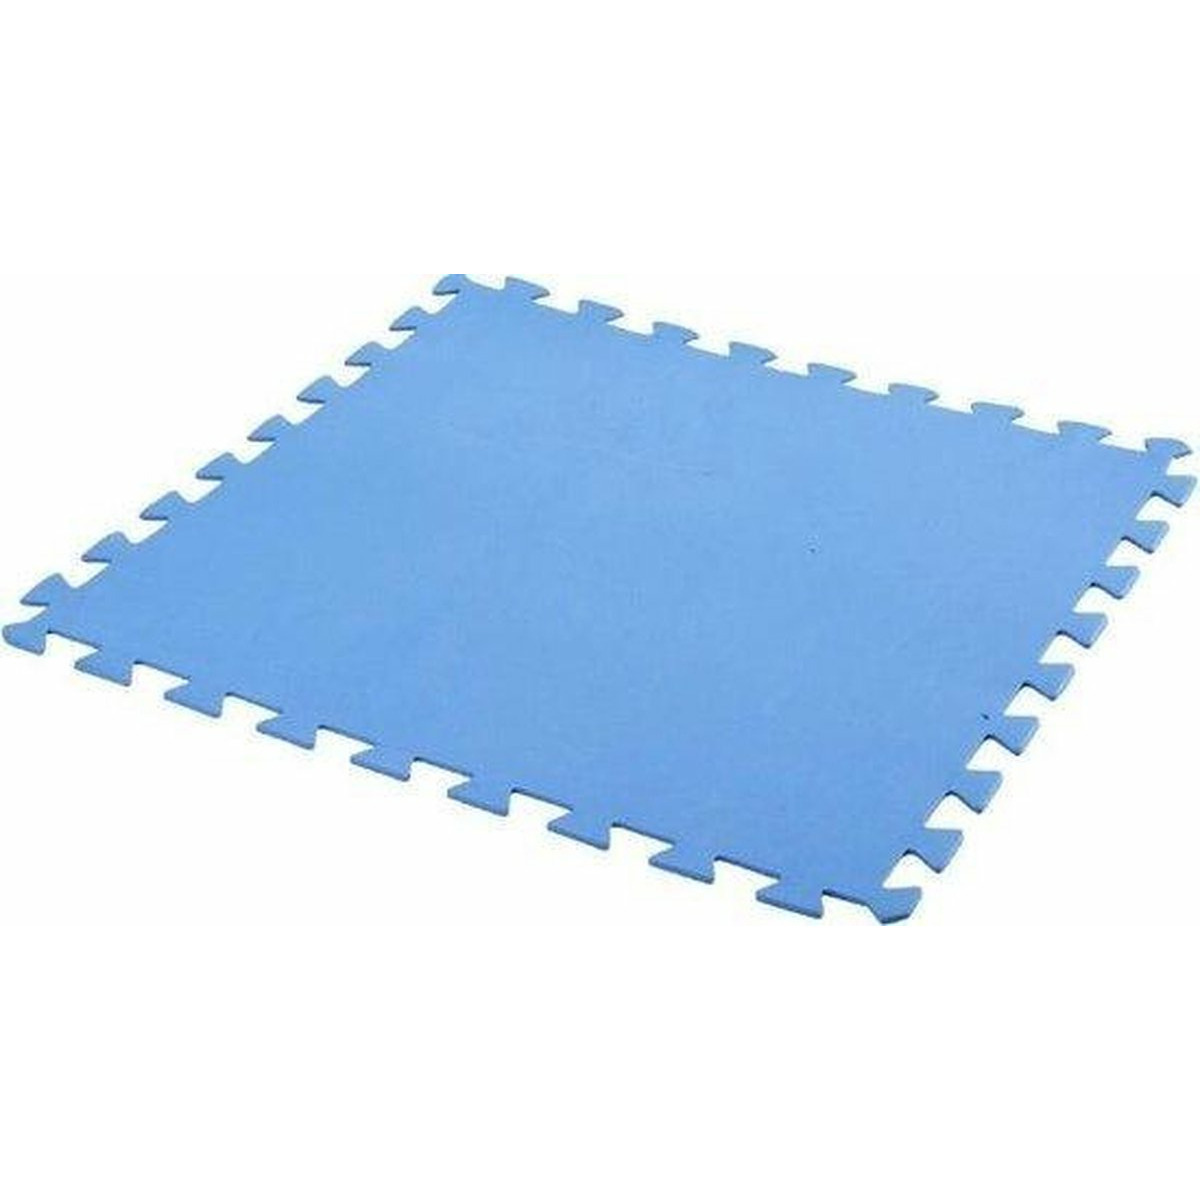 9x stuks Foam zwembadtegels blauw 50 x 50 cm